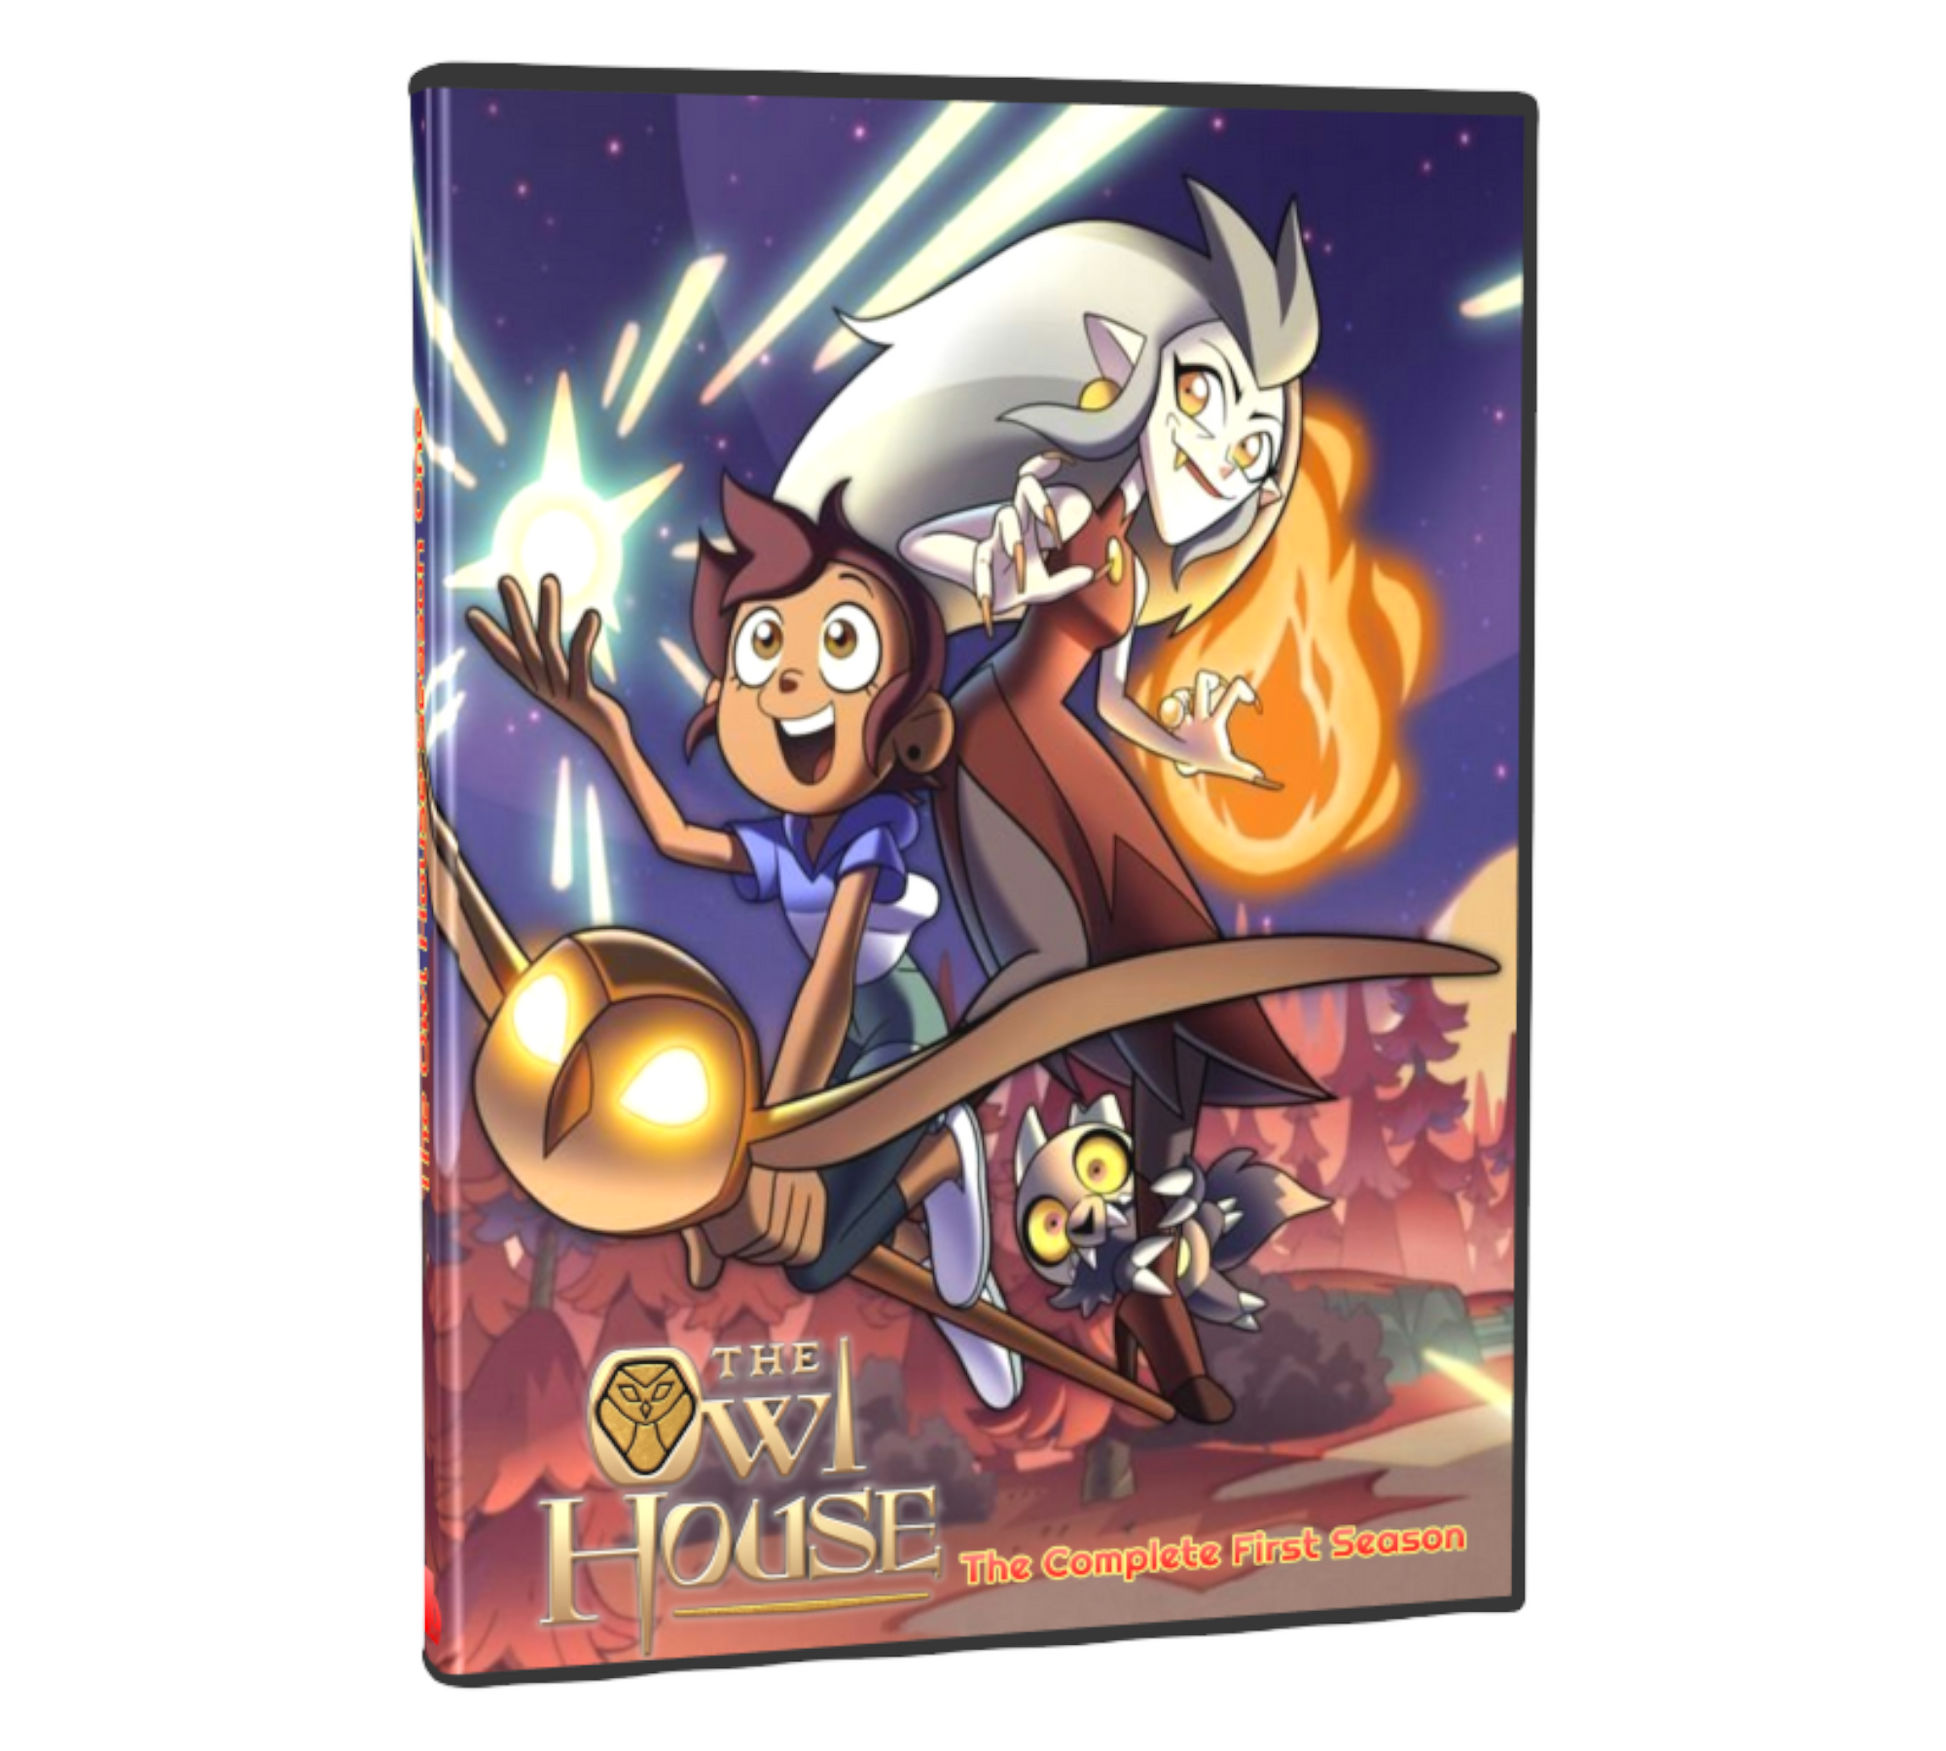 The Owl House Season 1 Image